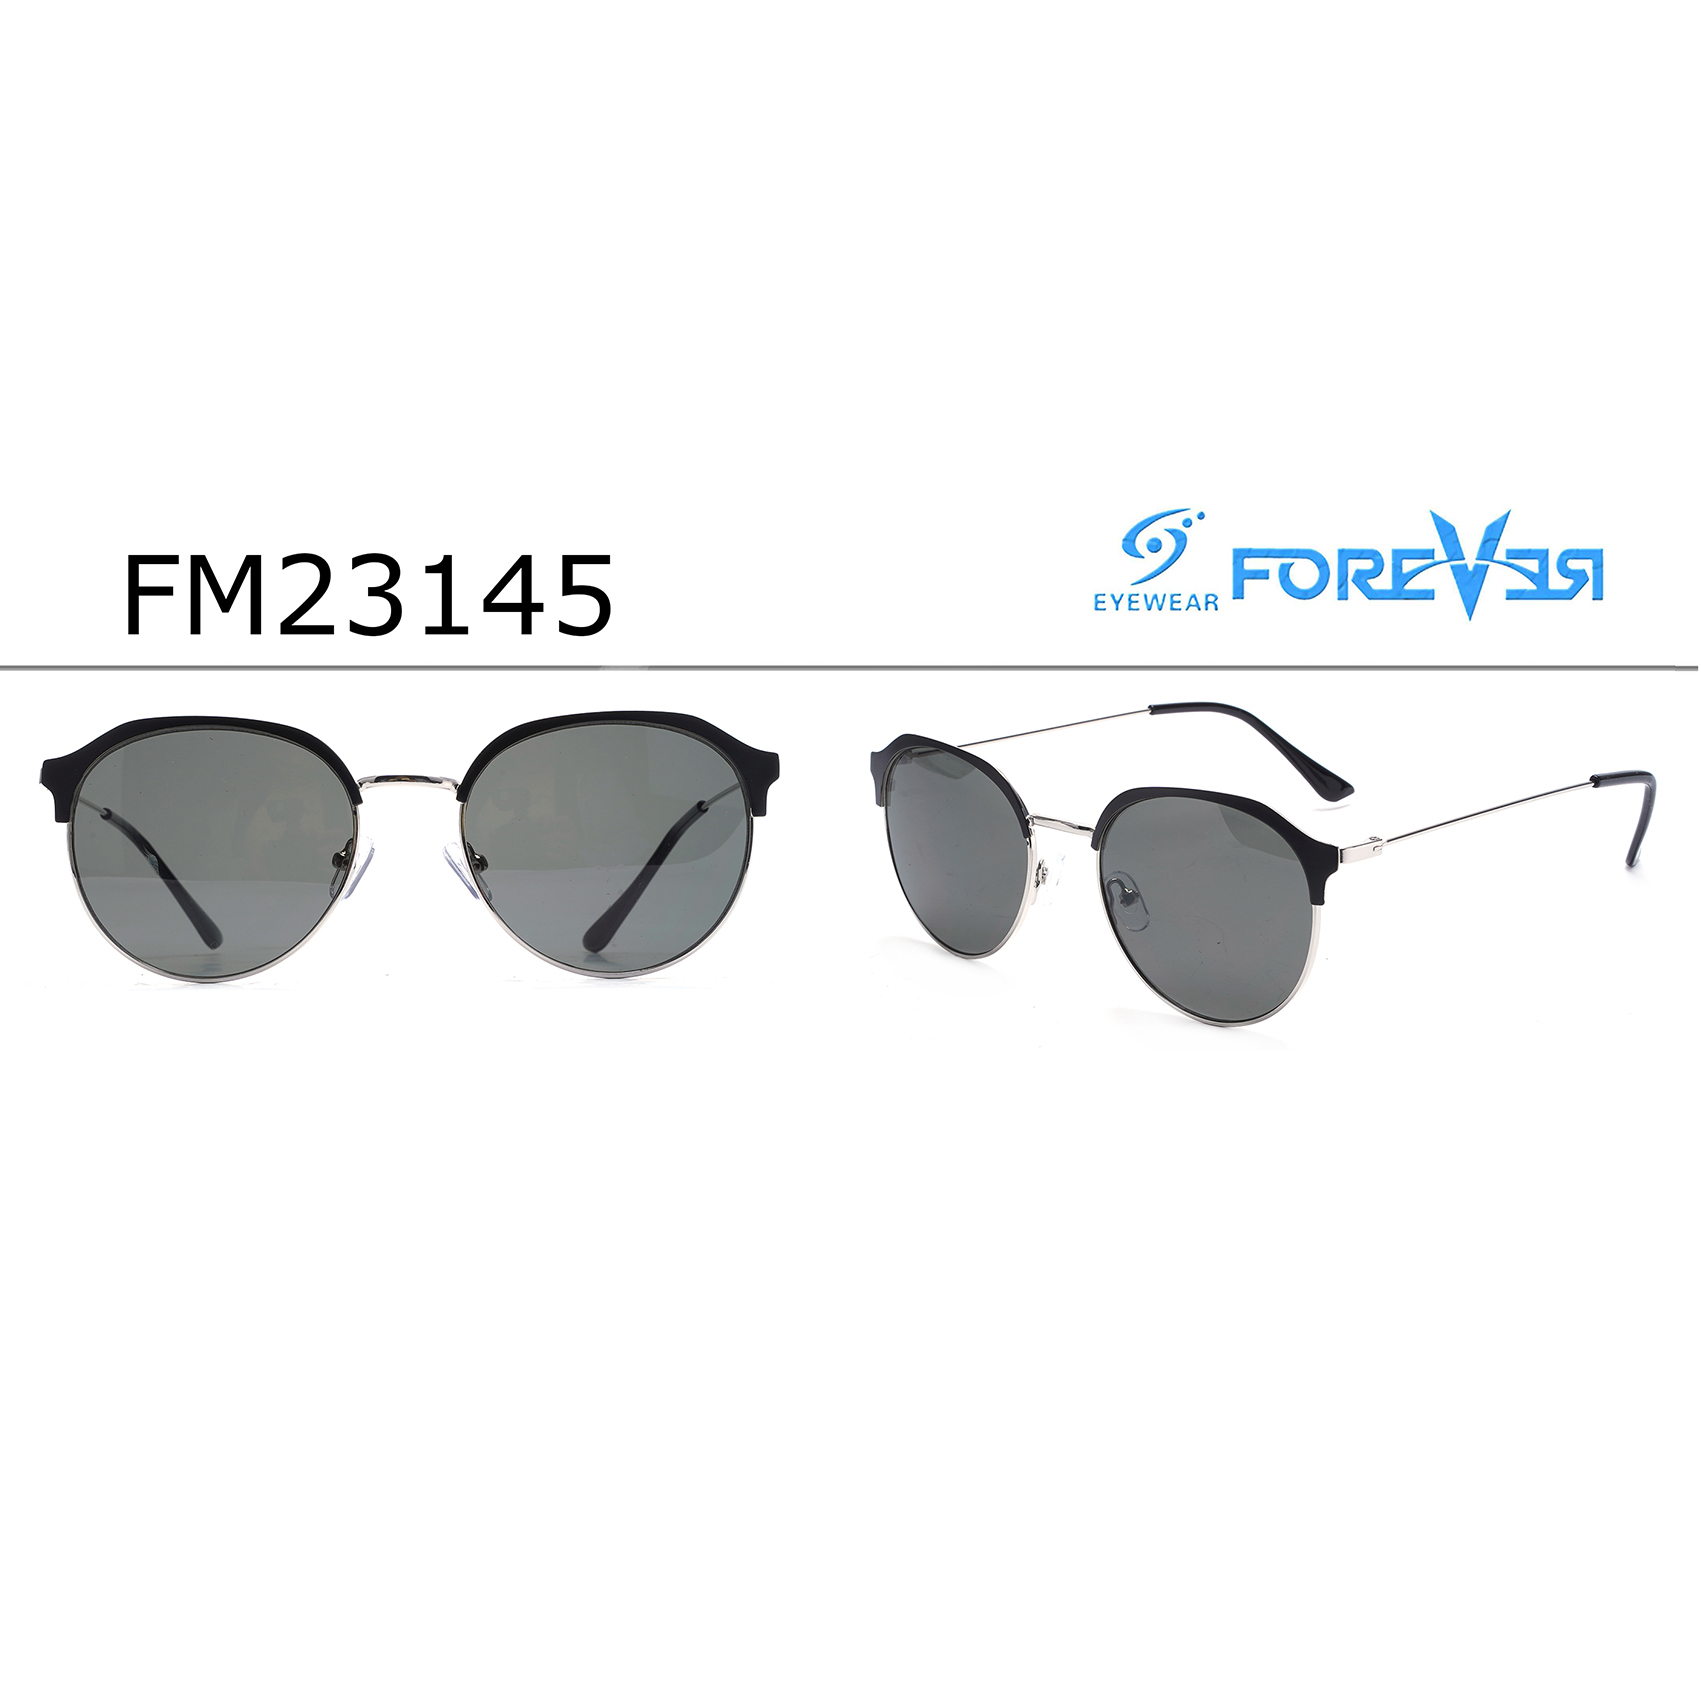 Simple Semi-rimless Clubmaster Sunglasses Forever New Sunglasses